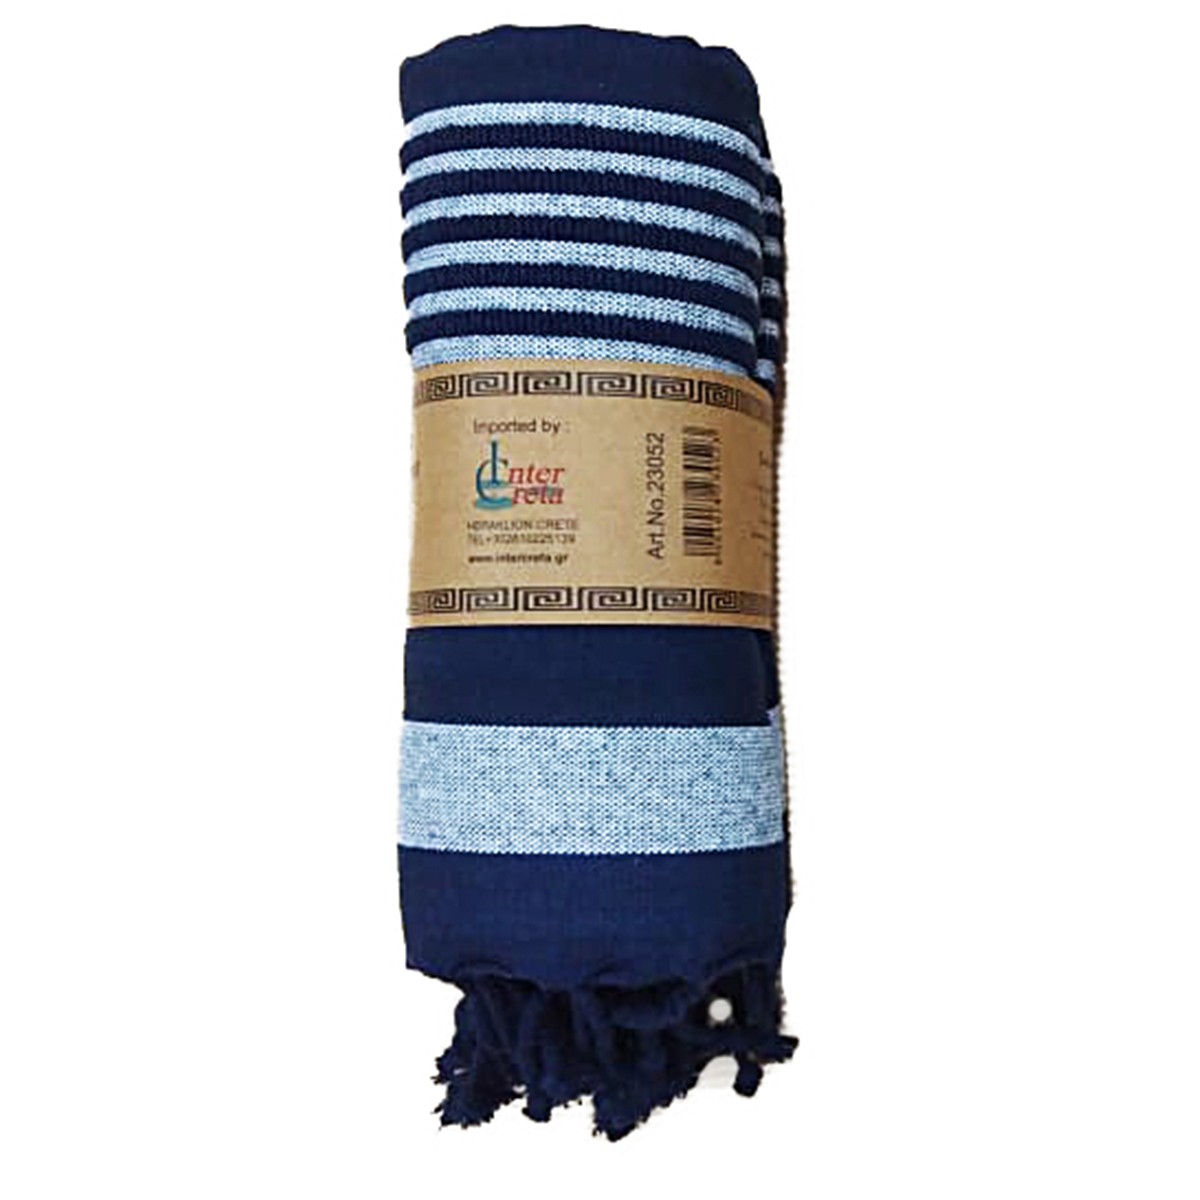 towel 23052 blue